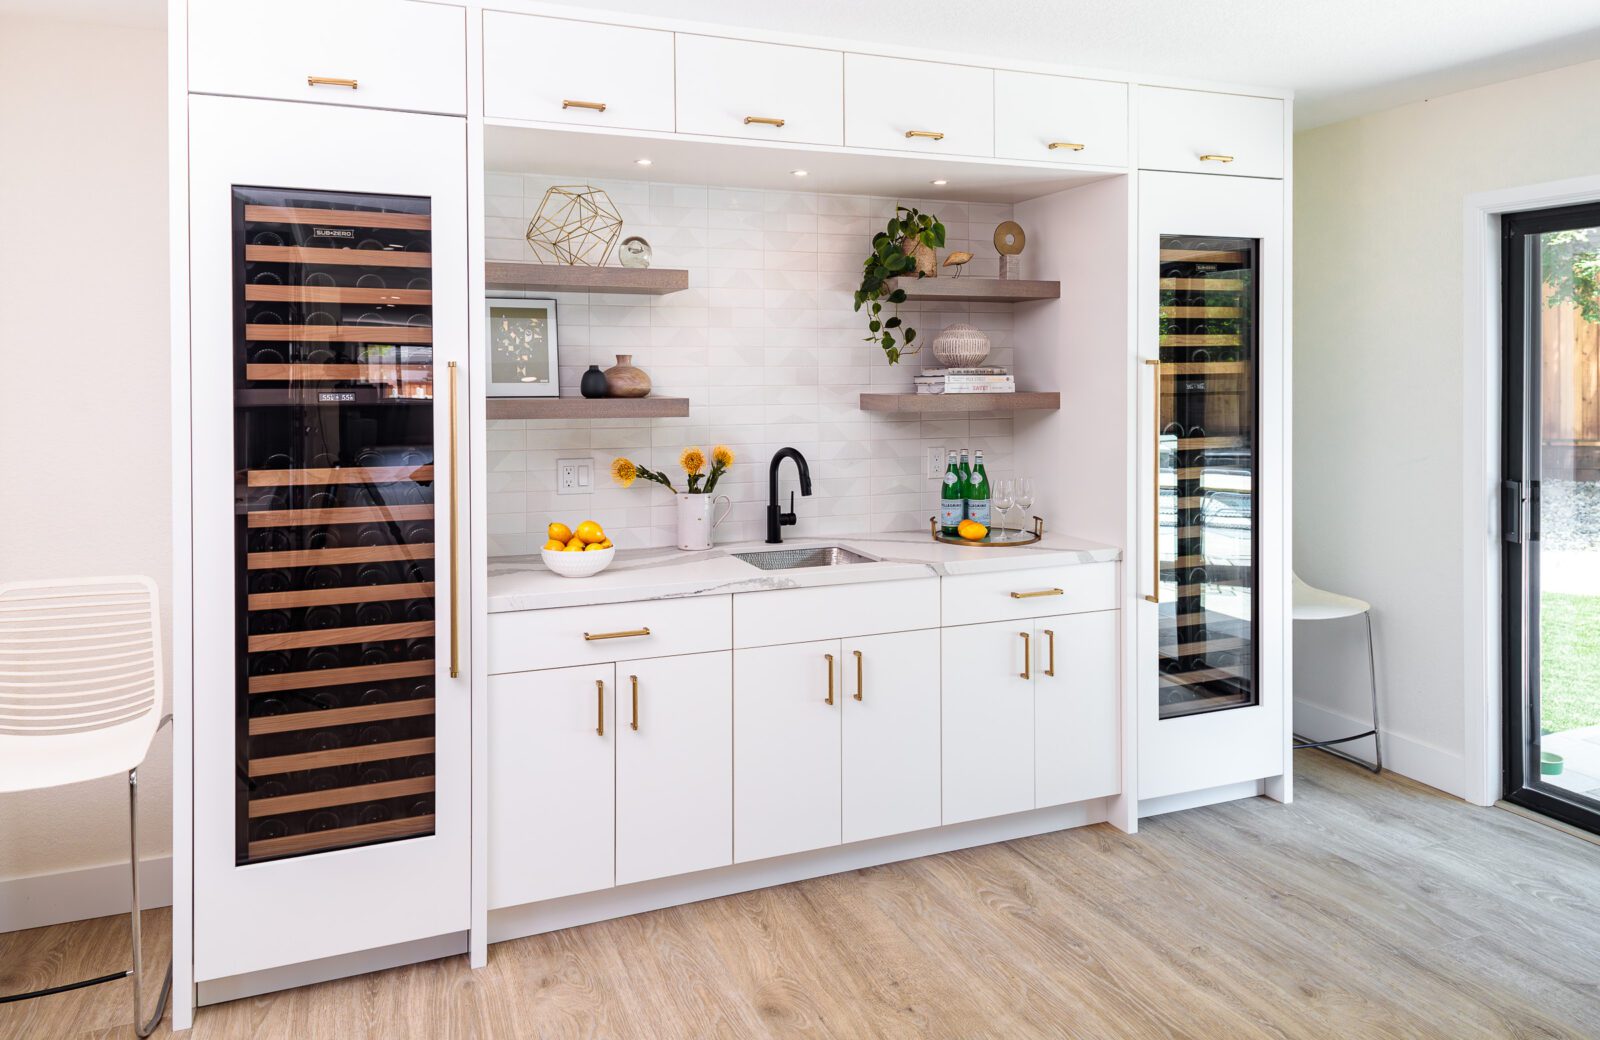 2 tall Miele wine refrigerators, white painted cabinets, wine bar, wood shelving